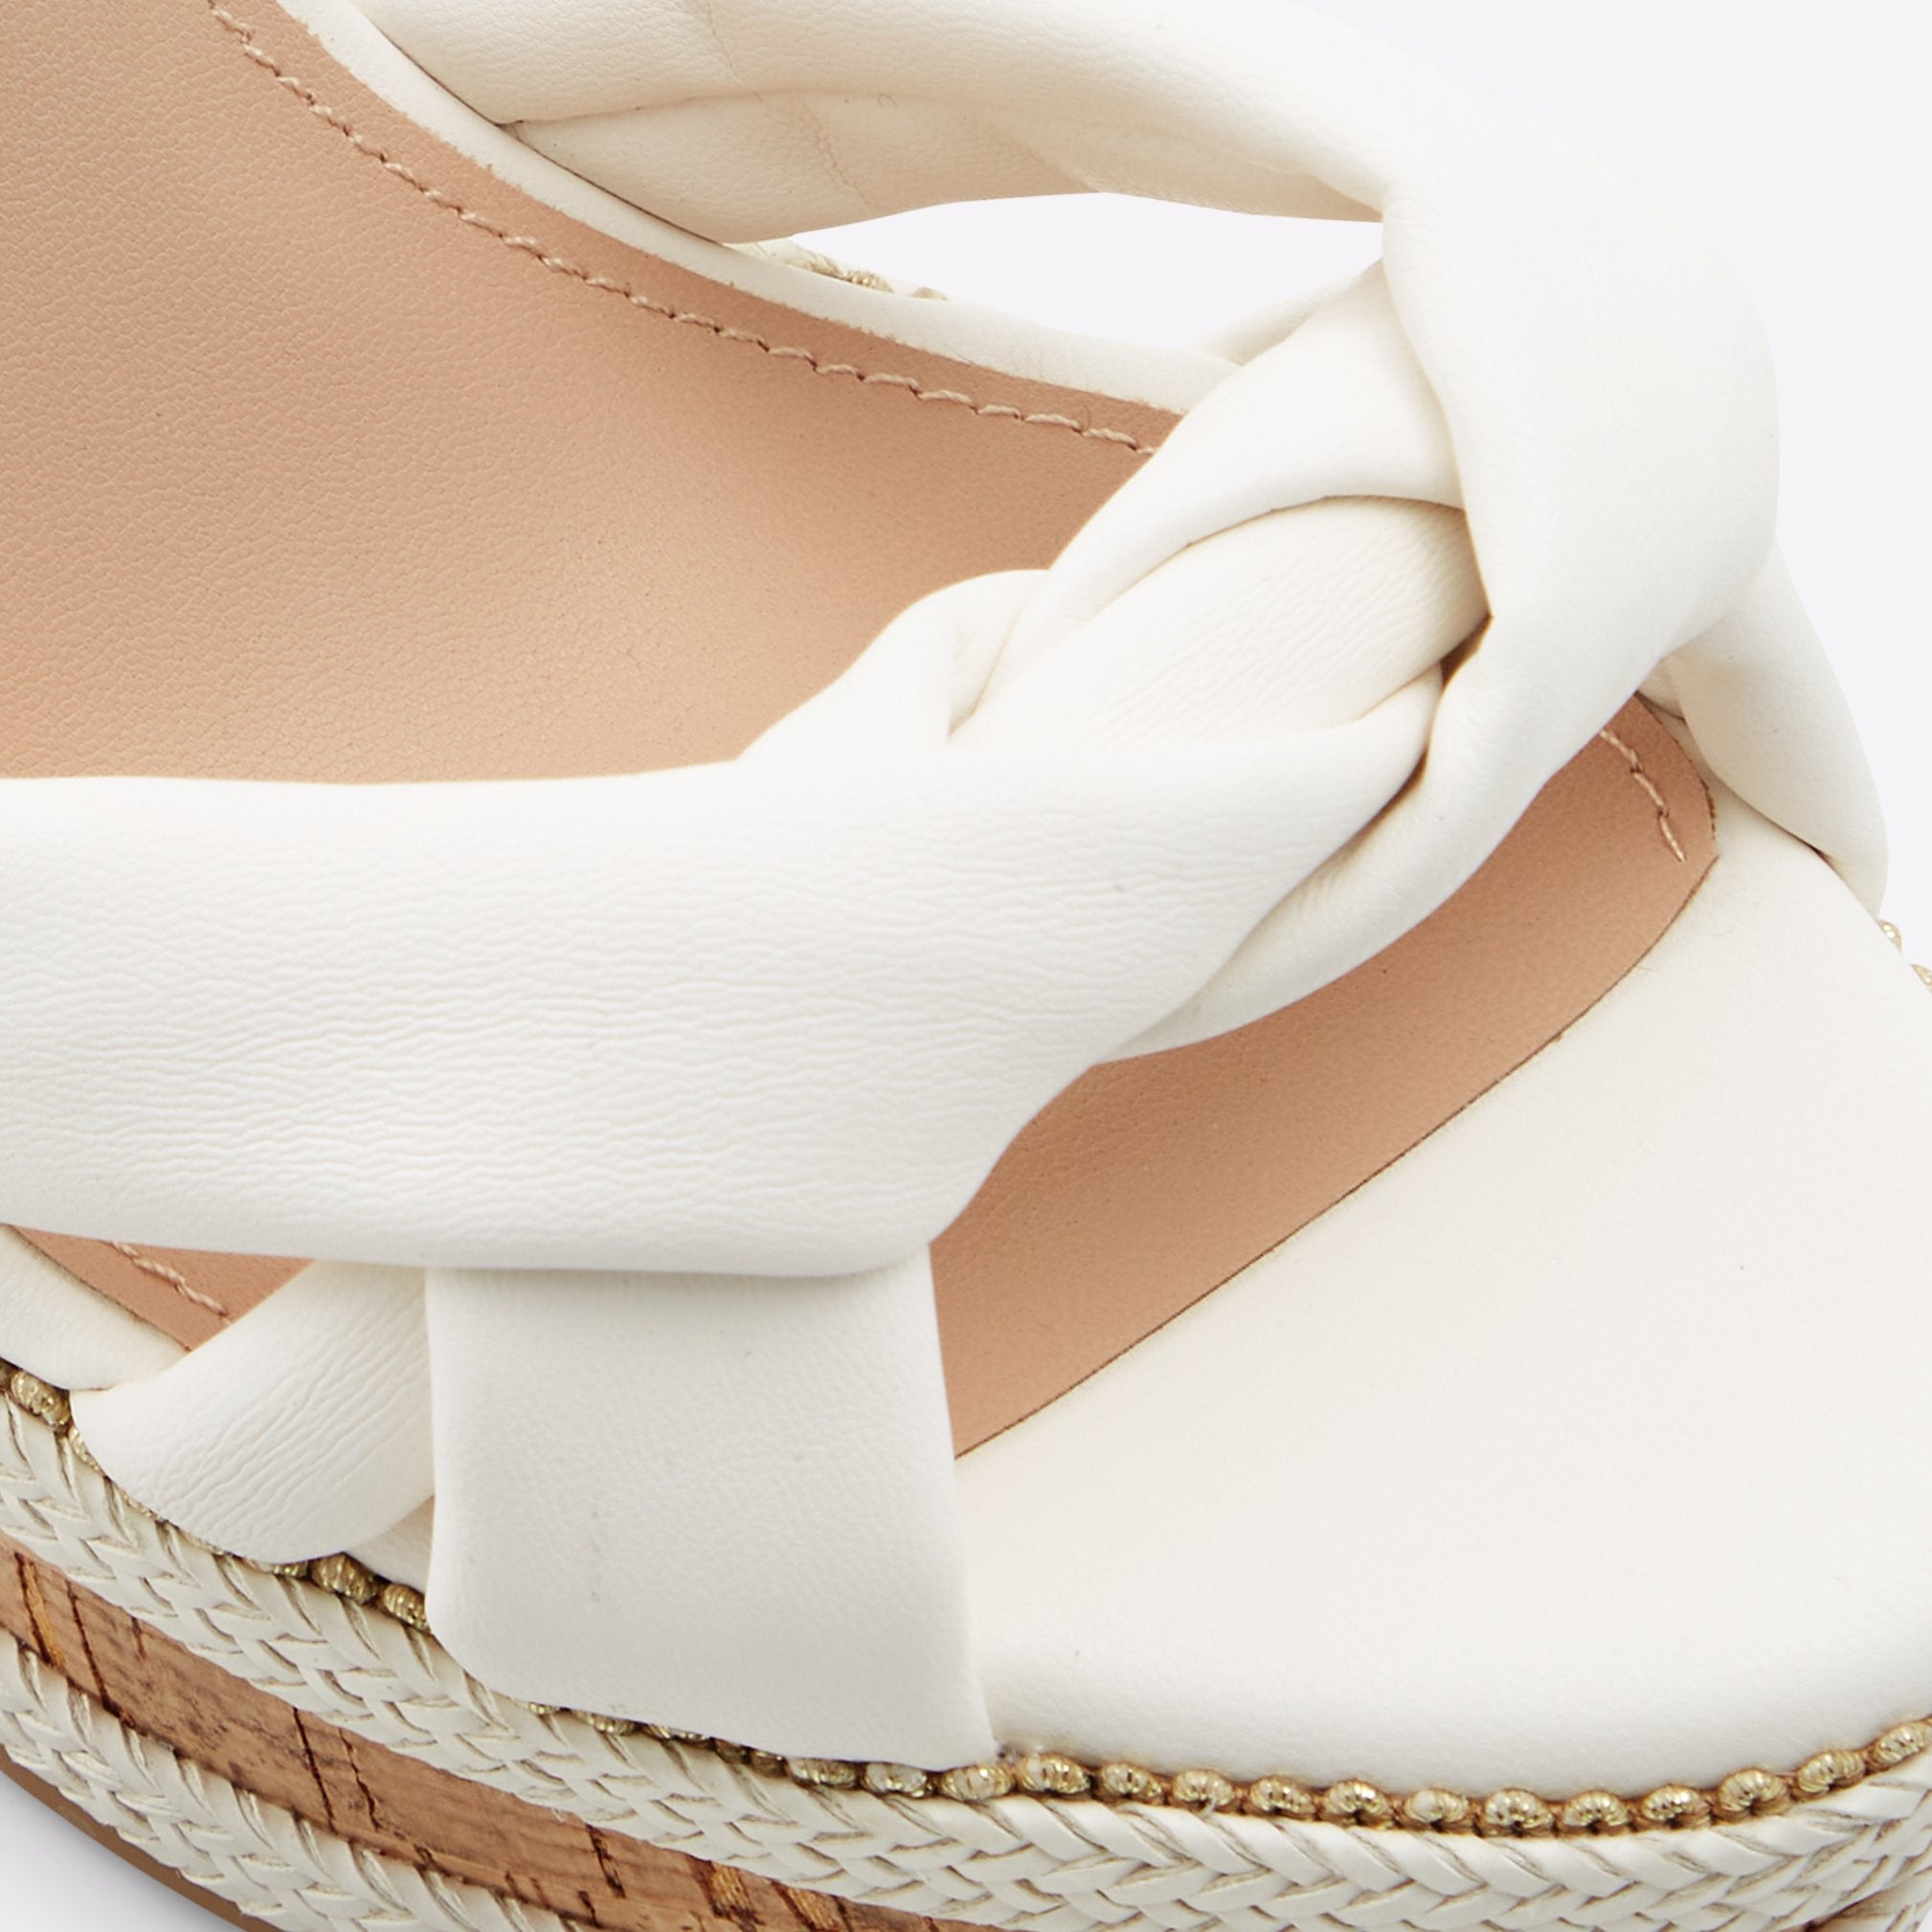 Adrirawen Women Shoes - White - ALDO KSA